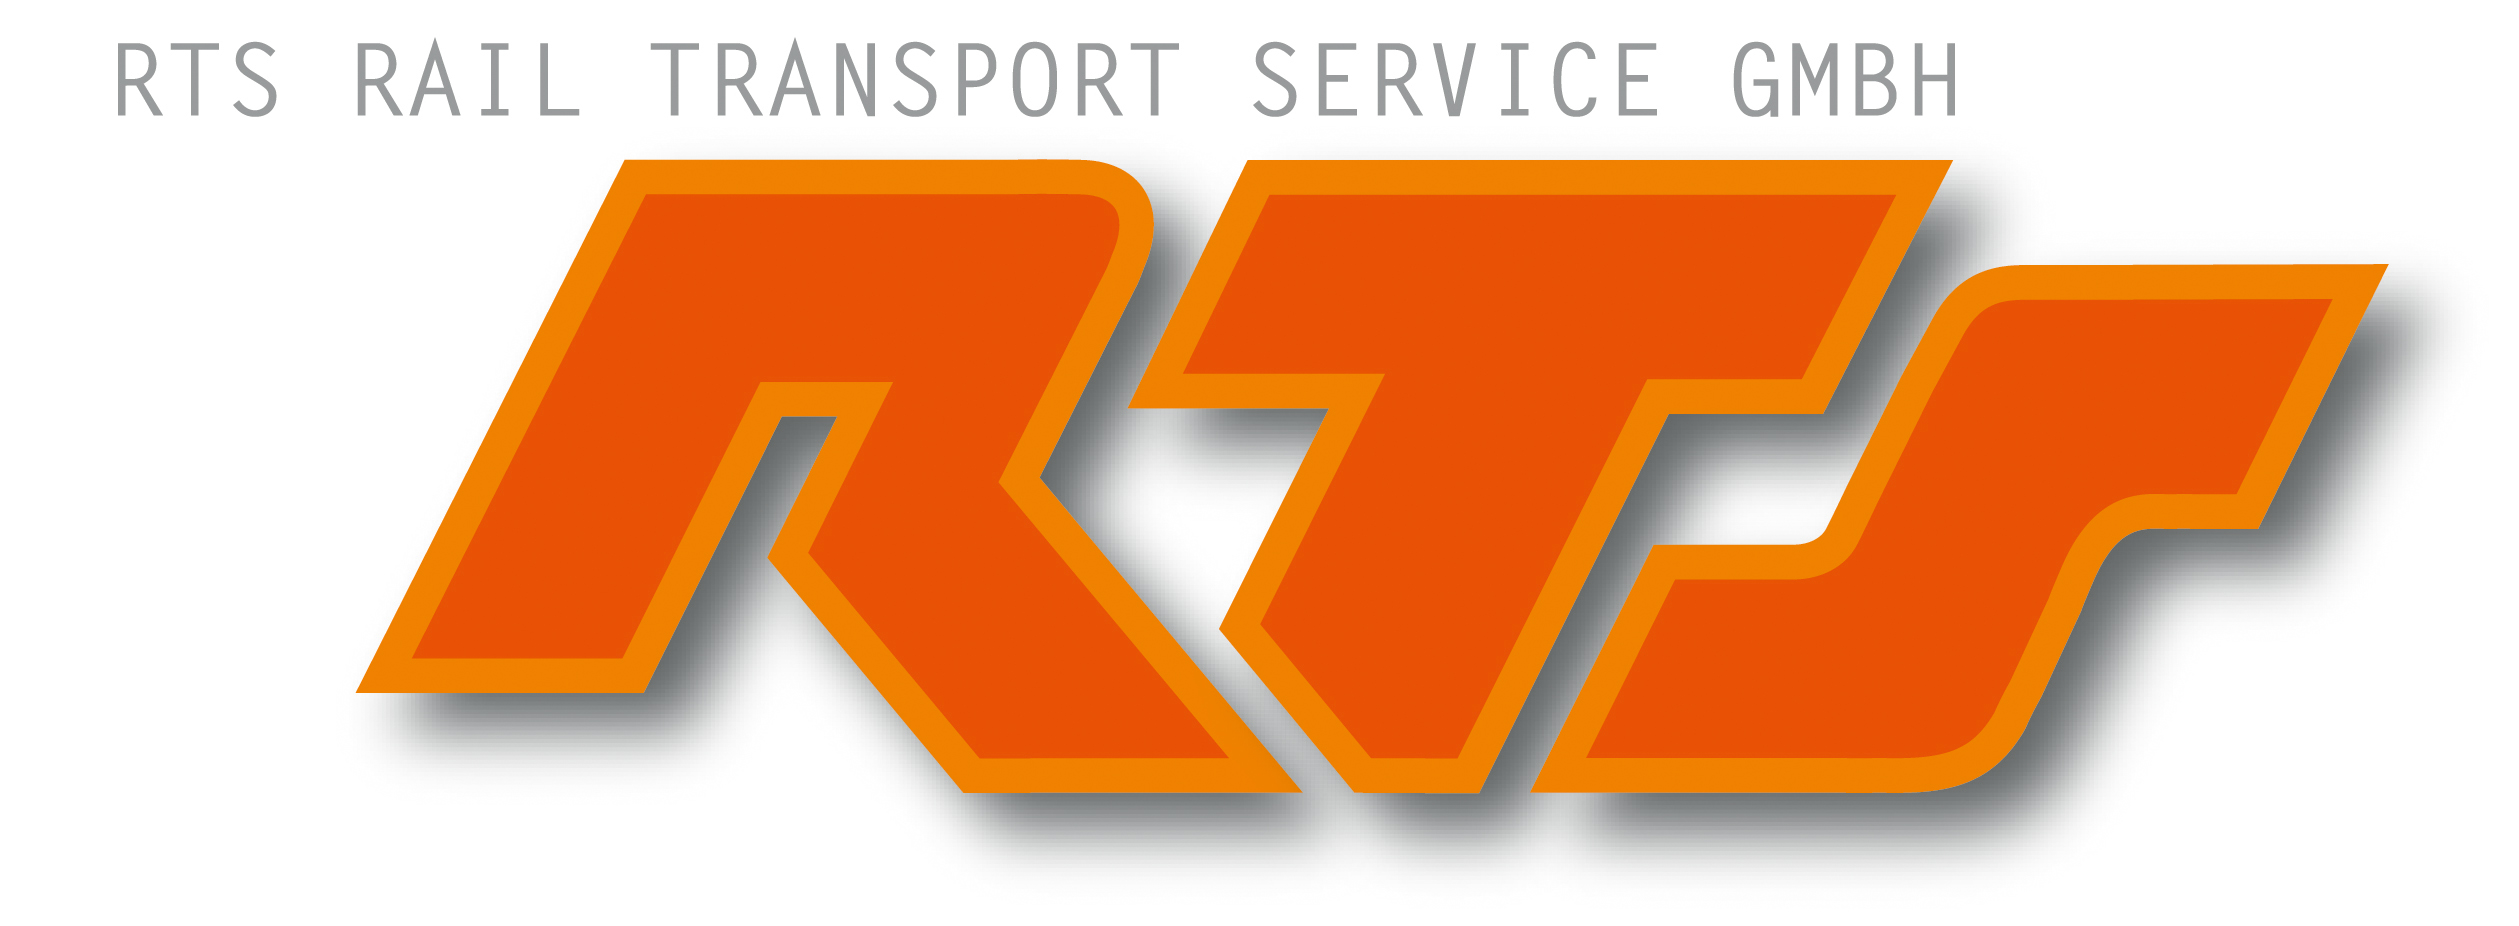 RTS Rail Transport Service GmbH